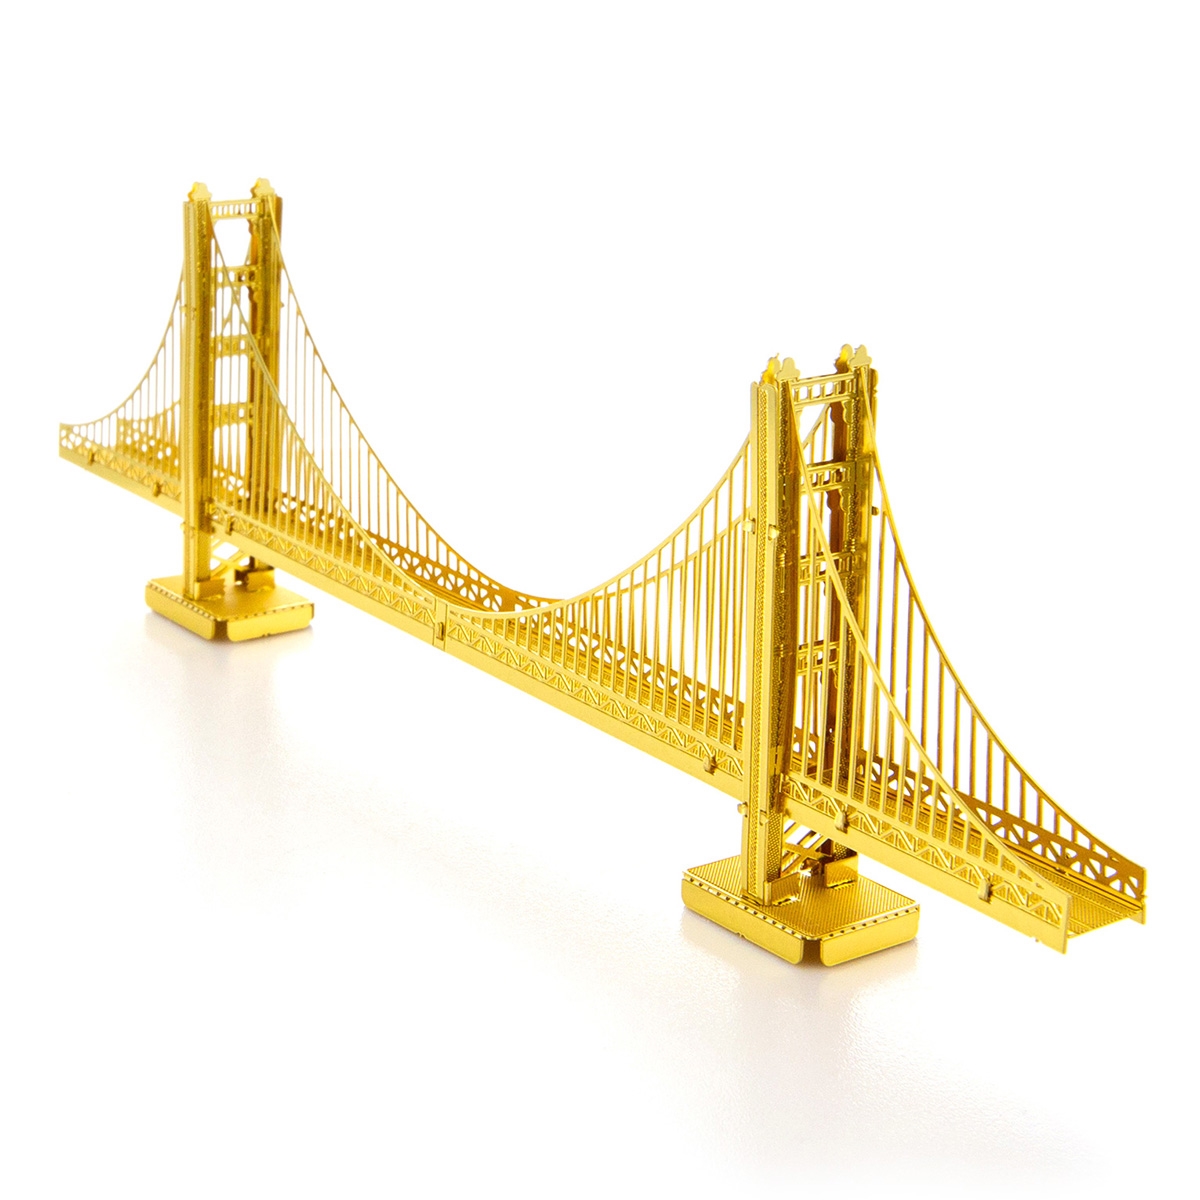 Golden Gate Bridge Gold MMS001G Fascinations Metal Earth Metal Model Kit 